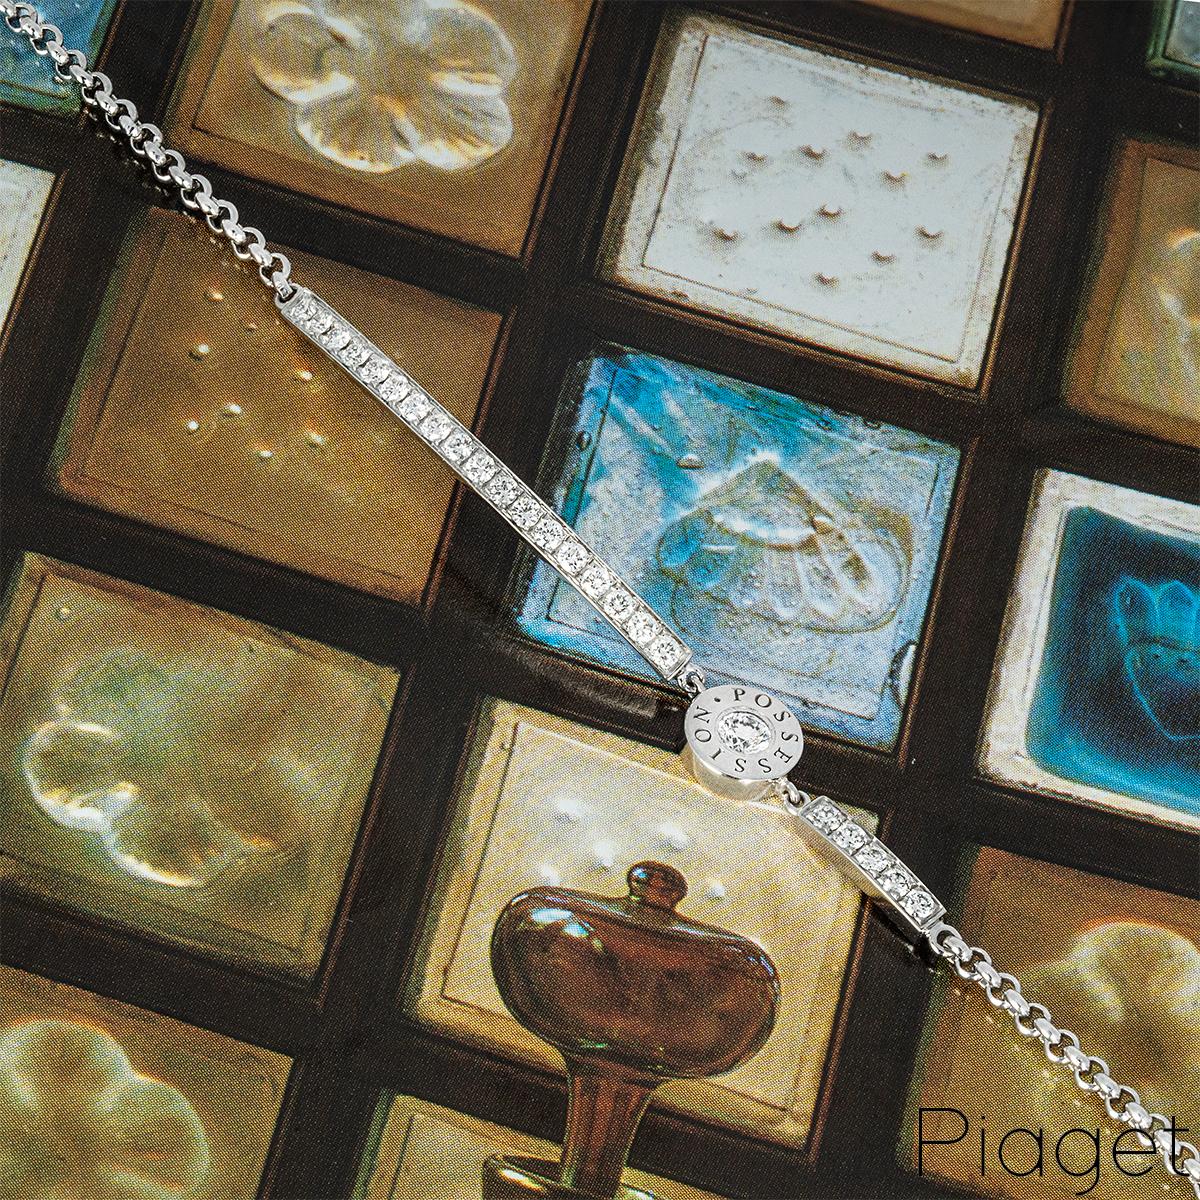 Piaget White Gold Diamond Possession Bracelet 1